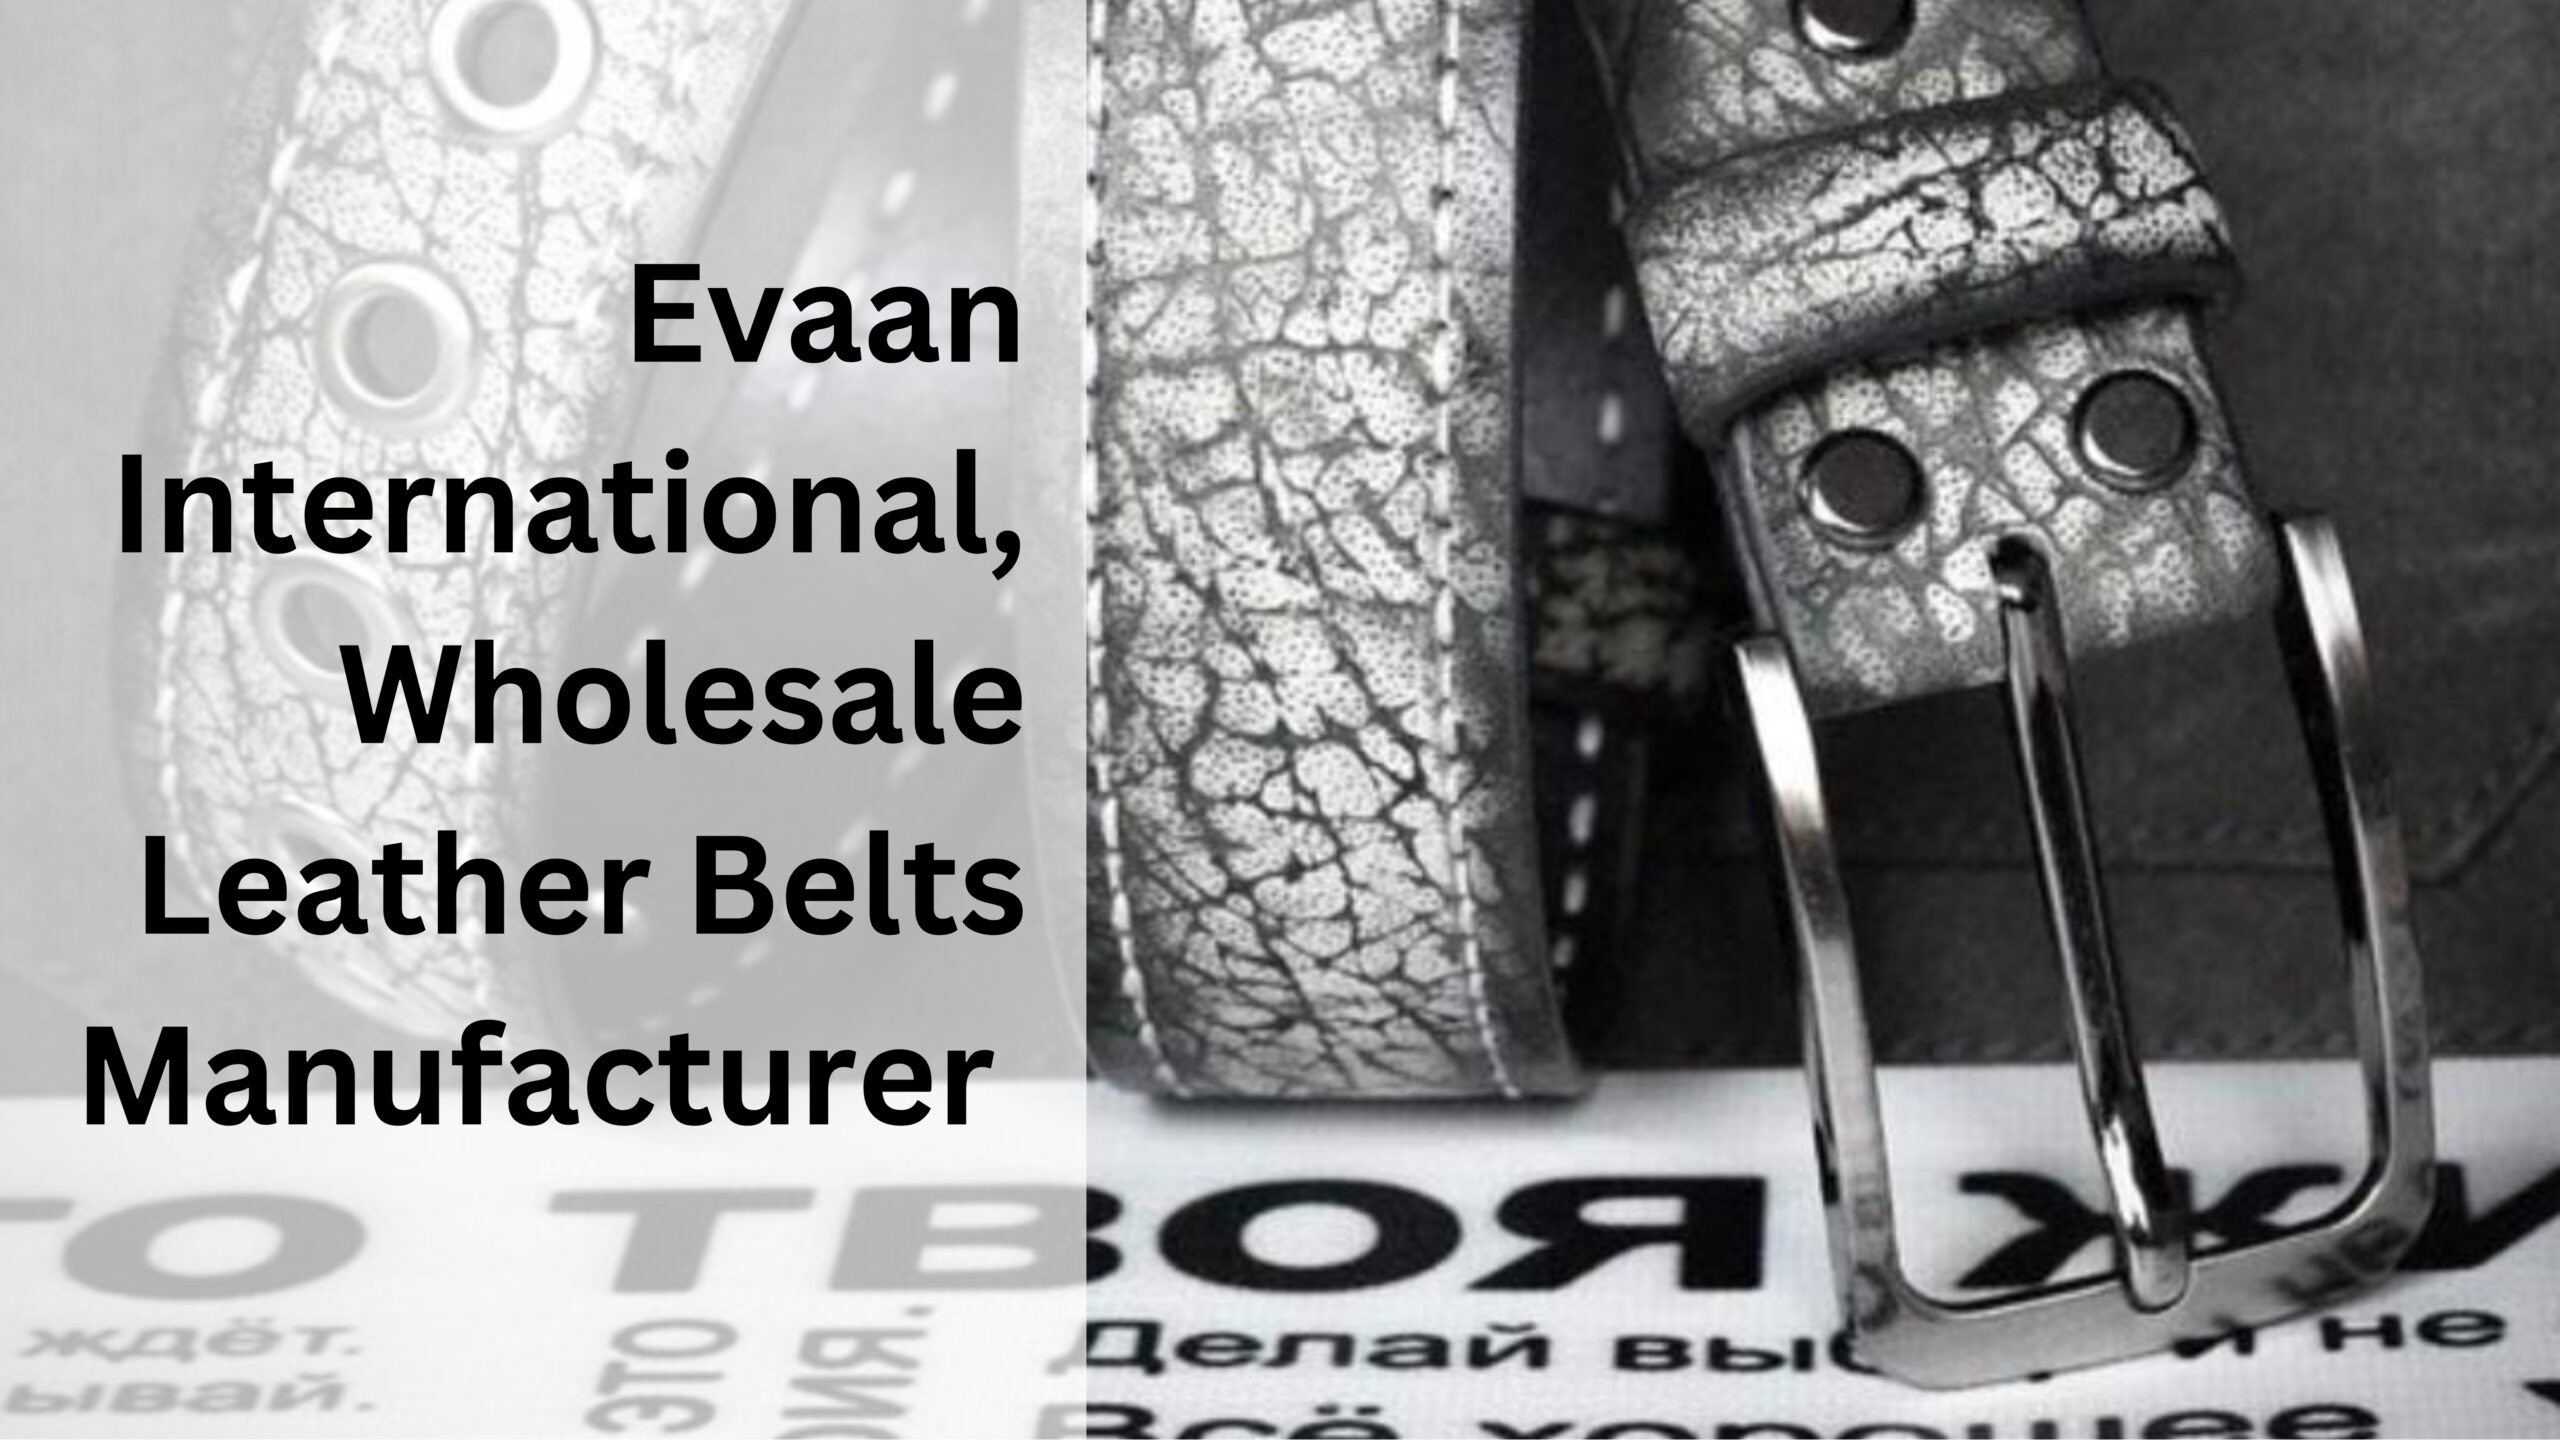 Wholesale Leather Belts Manufacturer Evaan International scaled